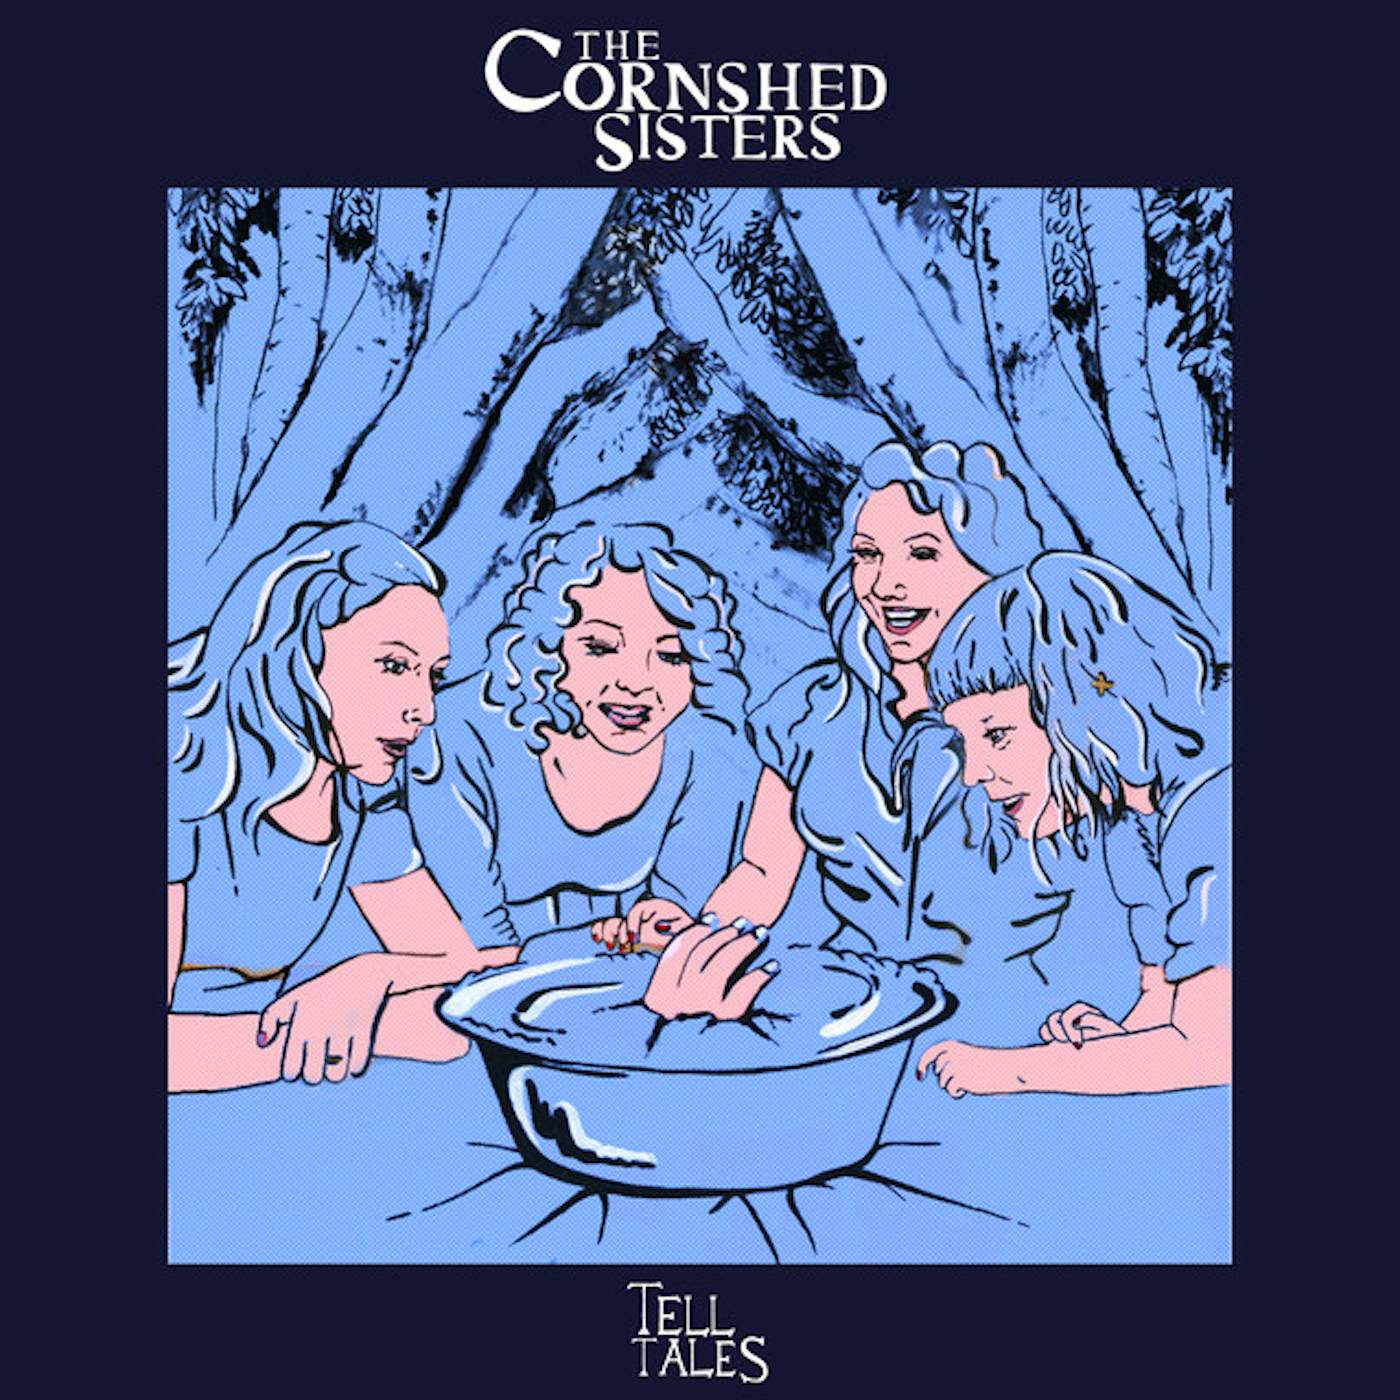 The Cornshed Sisters Tell Tales Vinyl Record